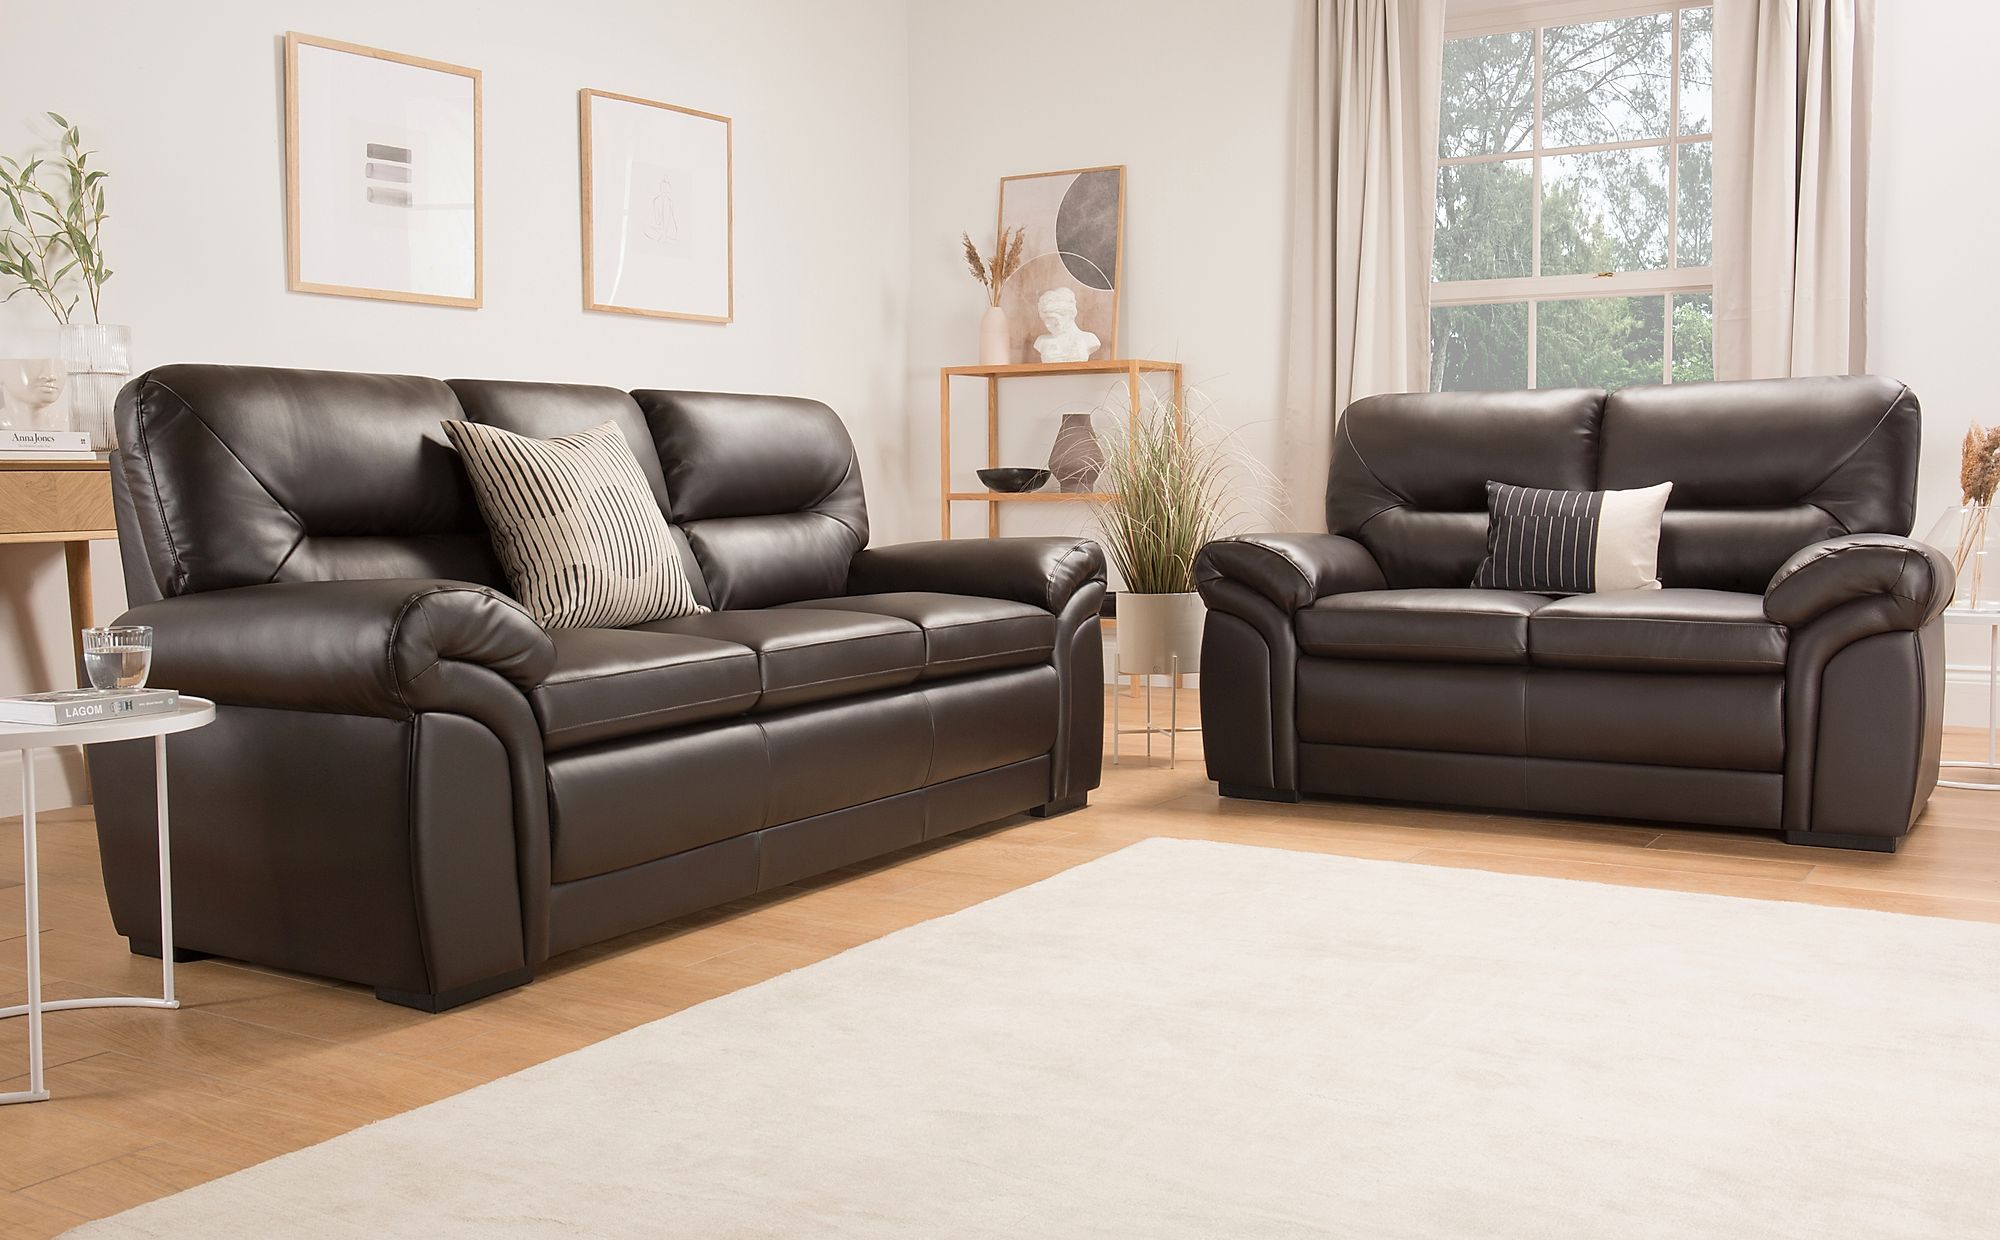 3 2 1 brown leather sofa